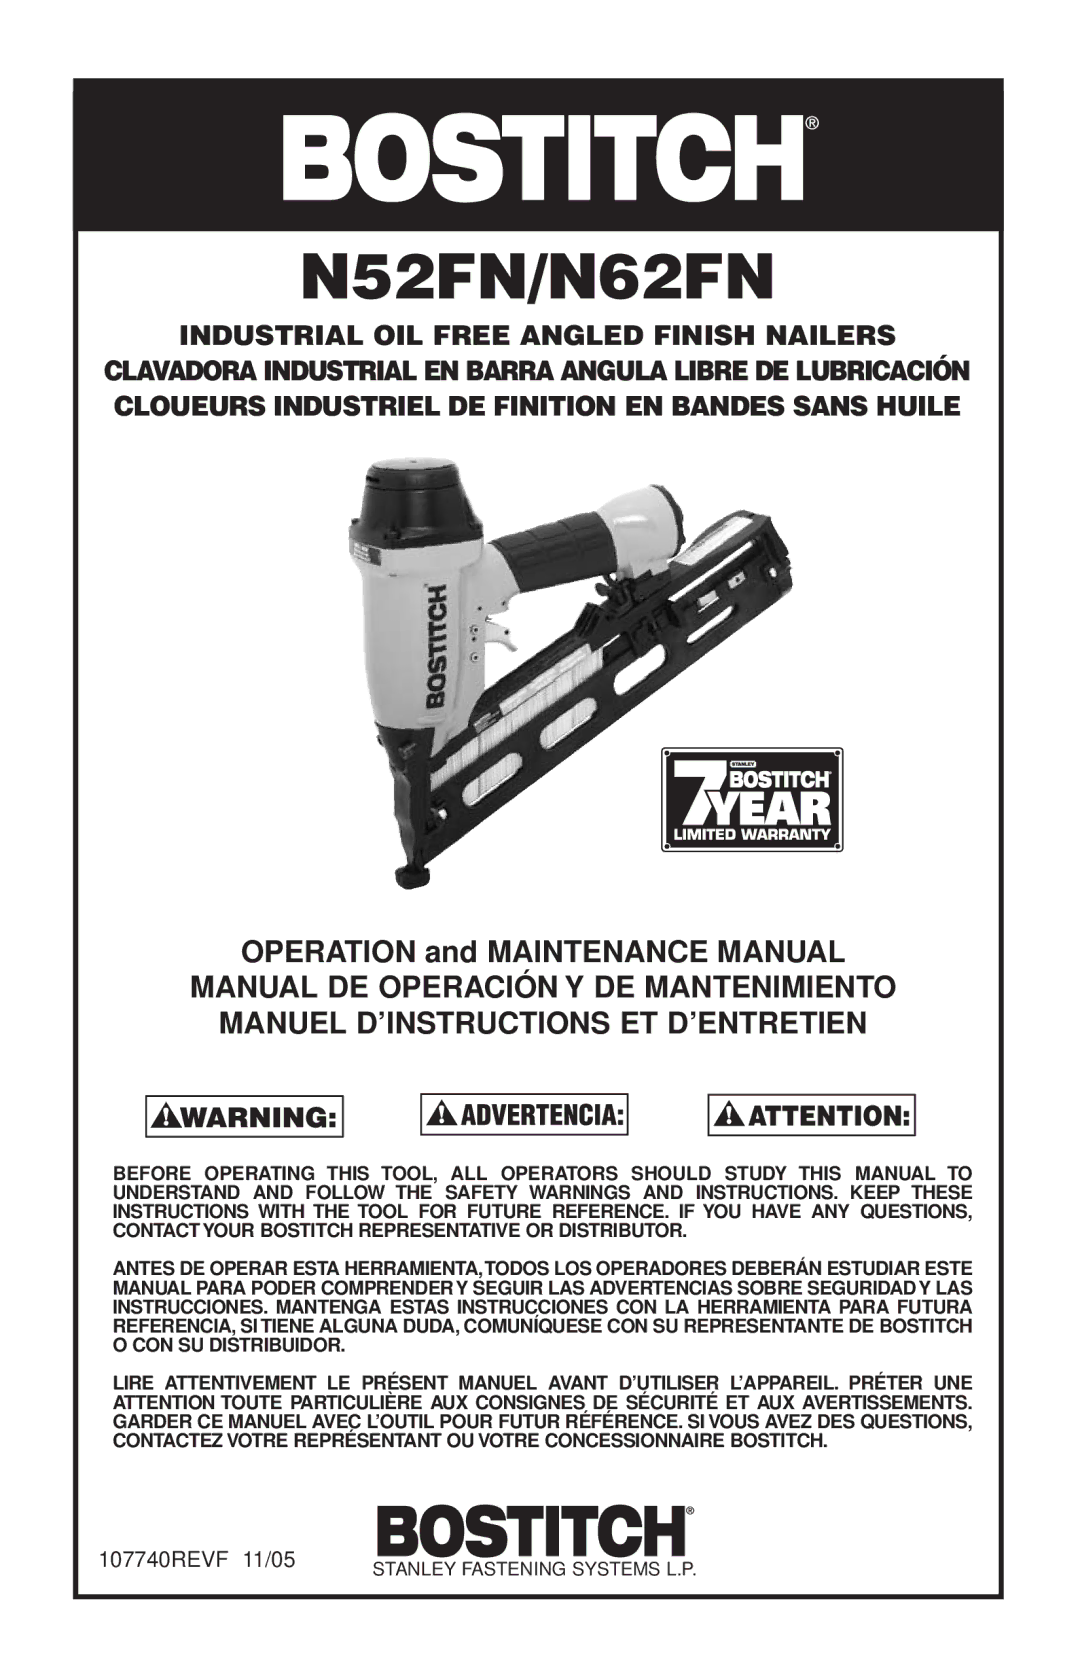 Quantaray manual N52FN/N62FN, Industrial OIL Free Angled Finish Nailers 